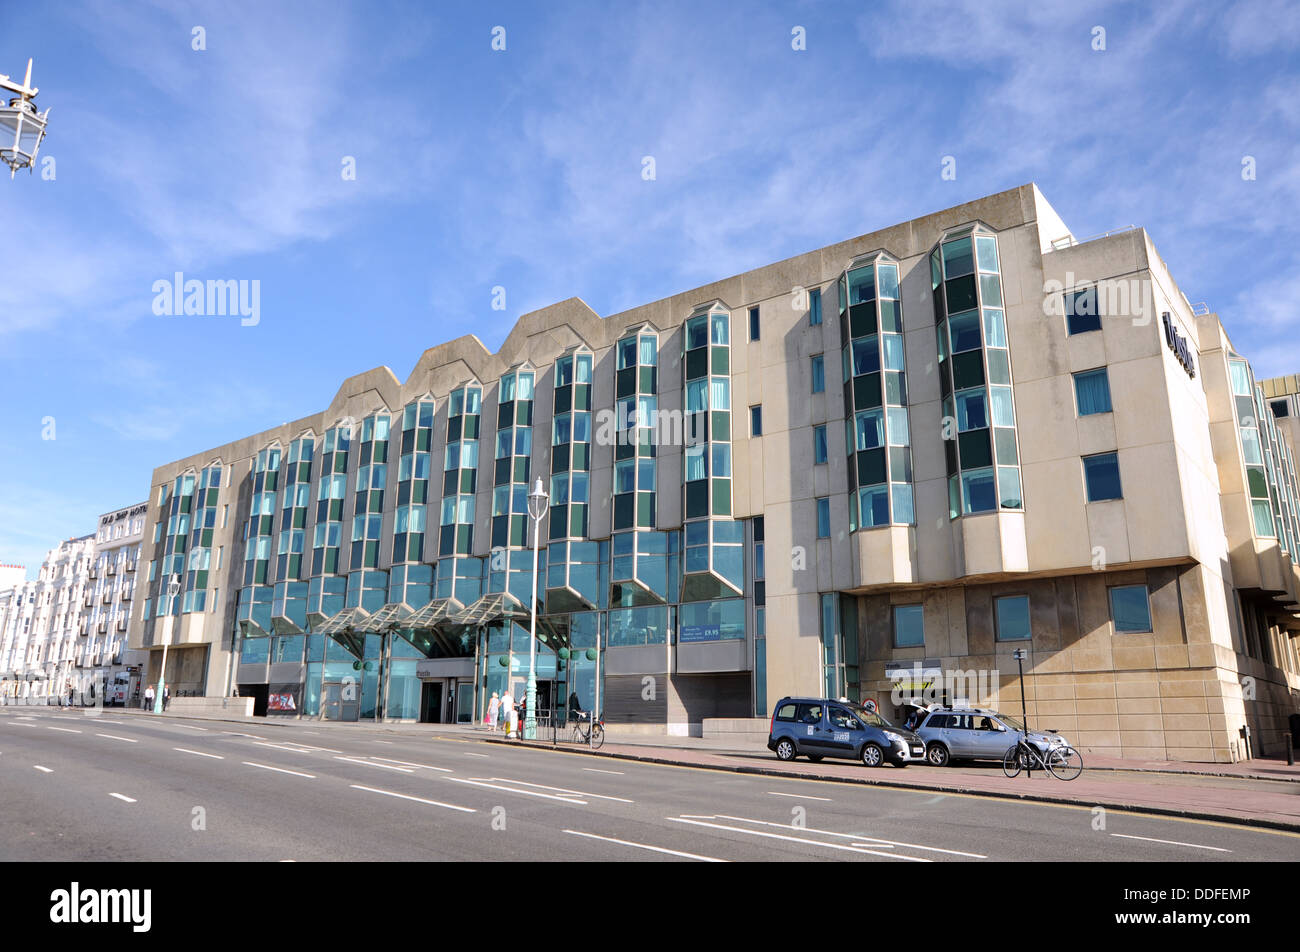 The Thistle Hotel Brighton seafront UK Stock Photo: 59962470 - Alamy